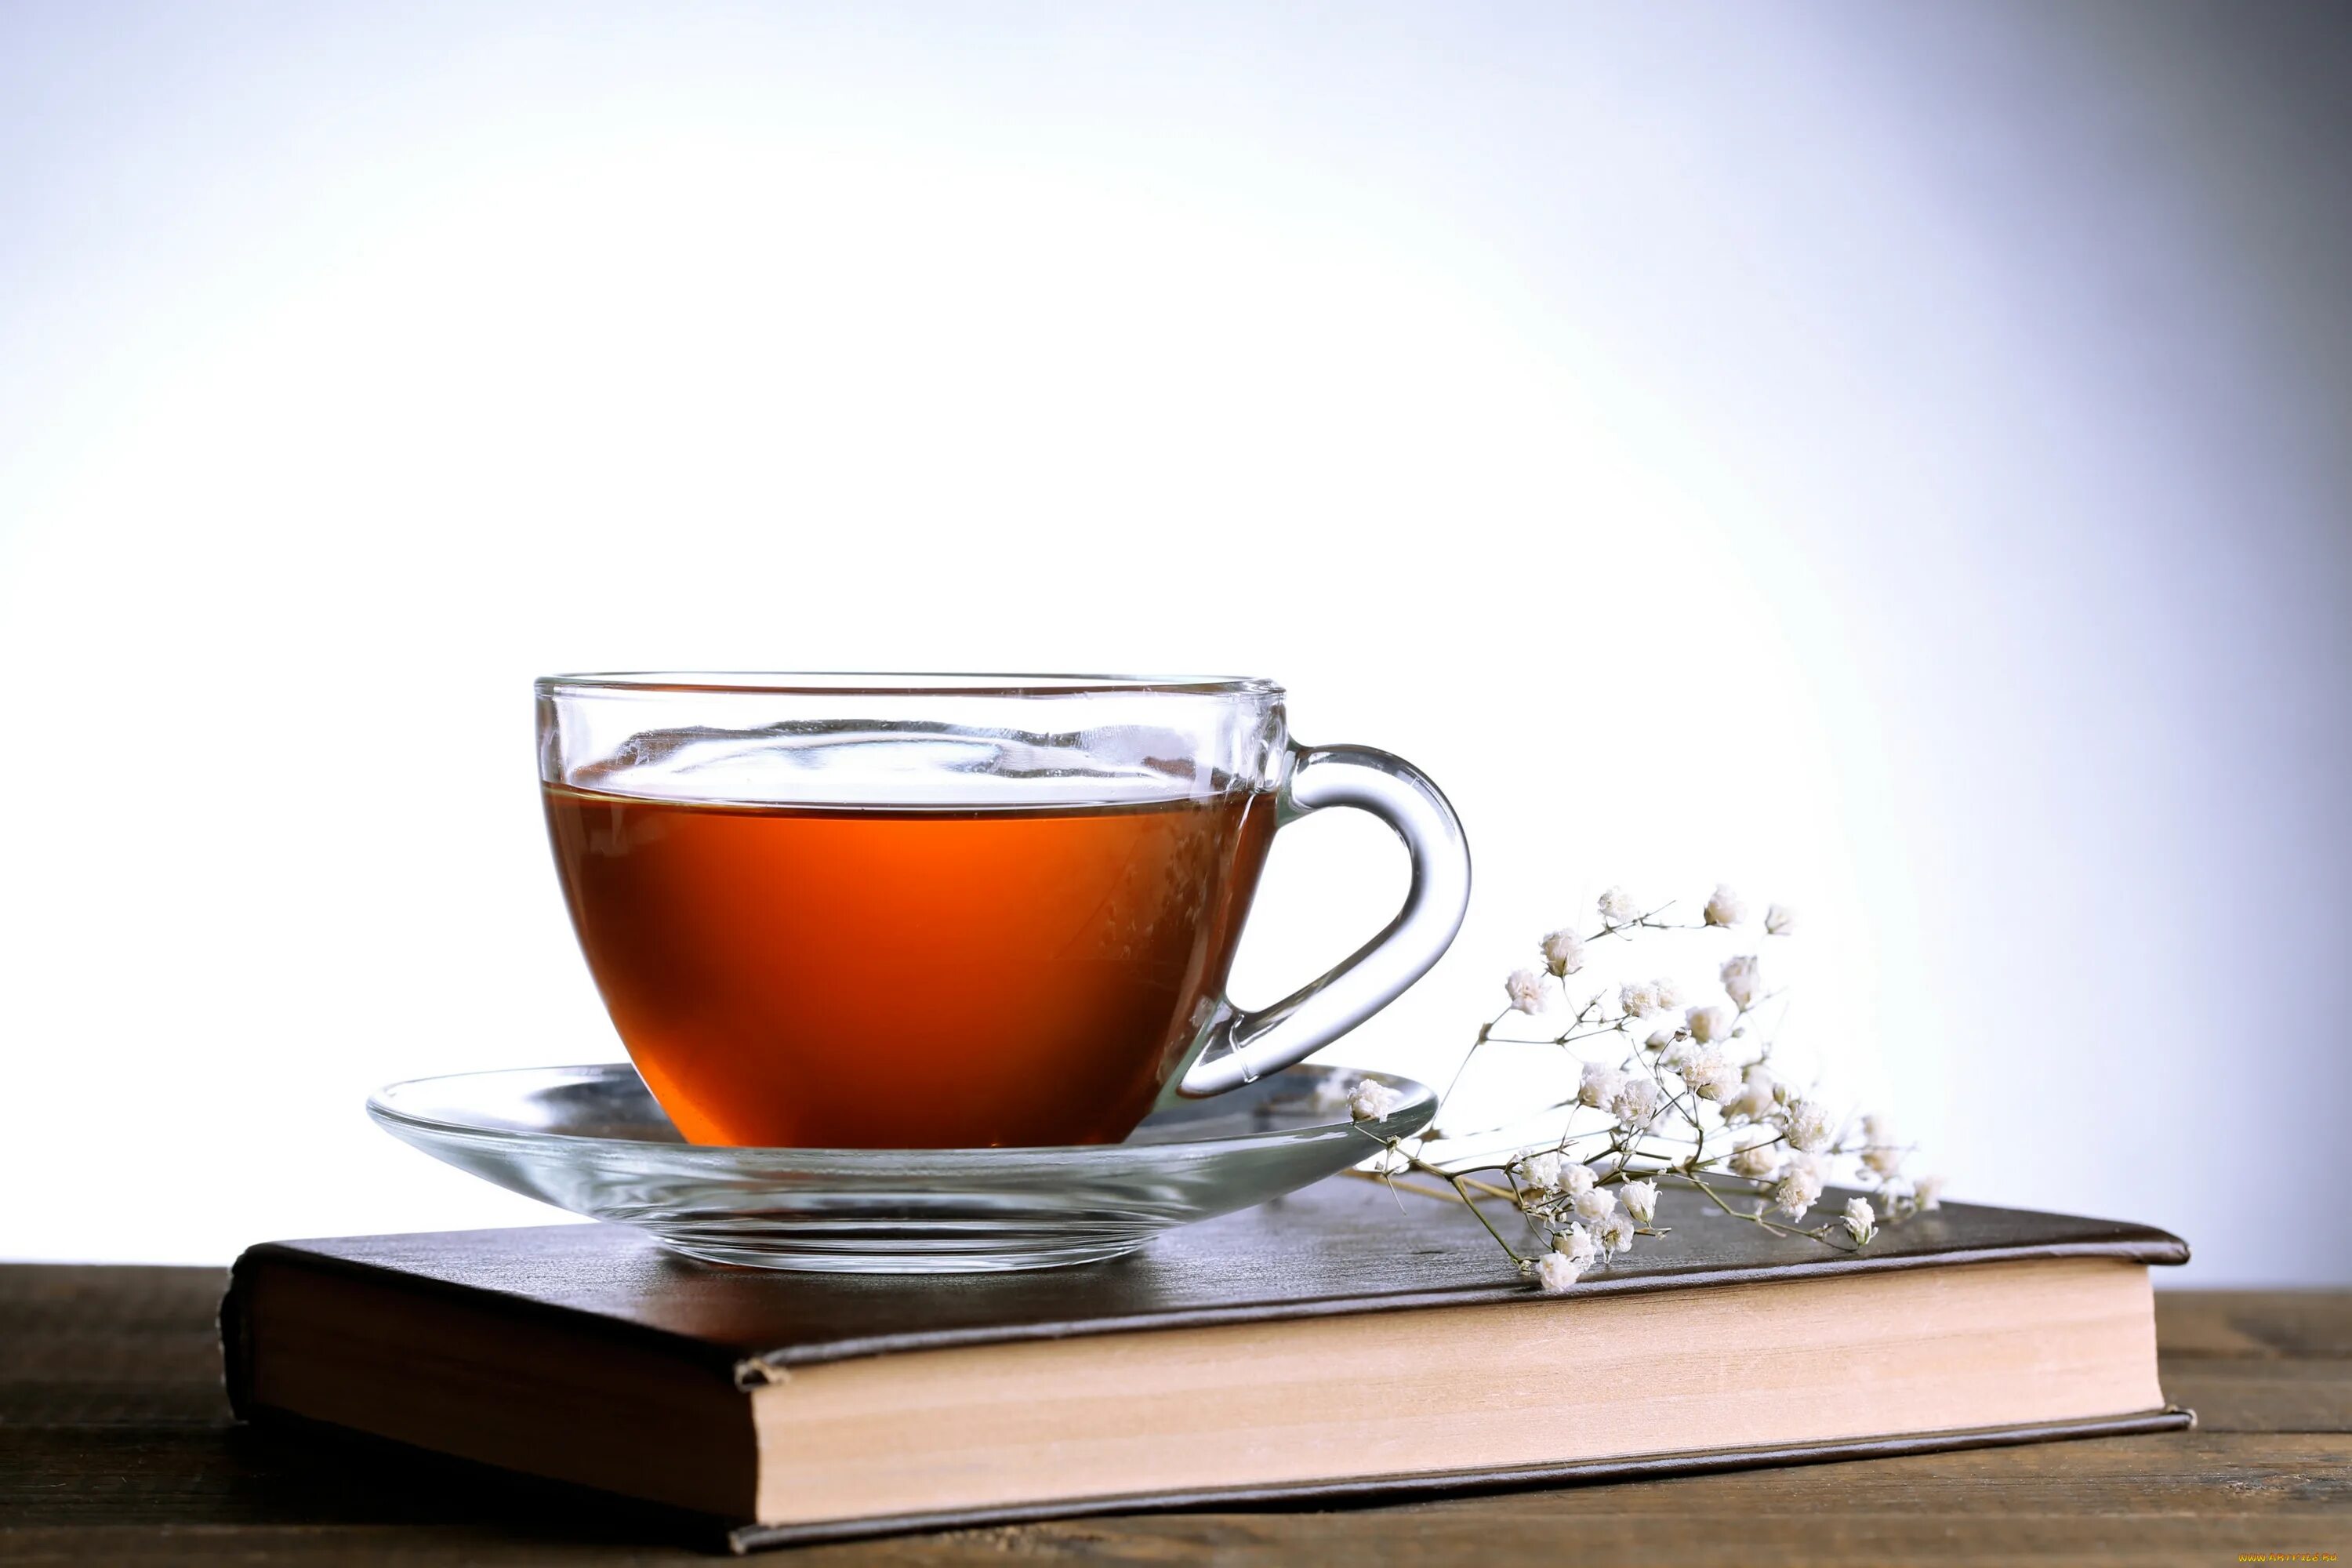 A cup of liber tea. Кружка чай. Кружка с чаем. Чай на столе. Чашка чая на столе.